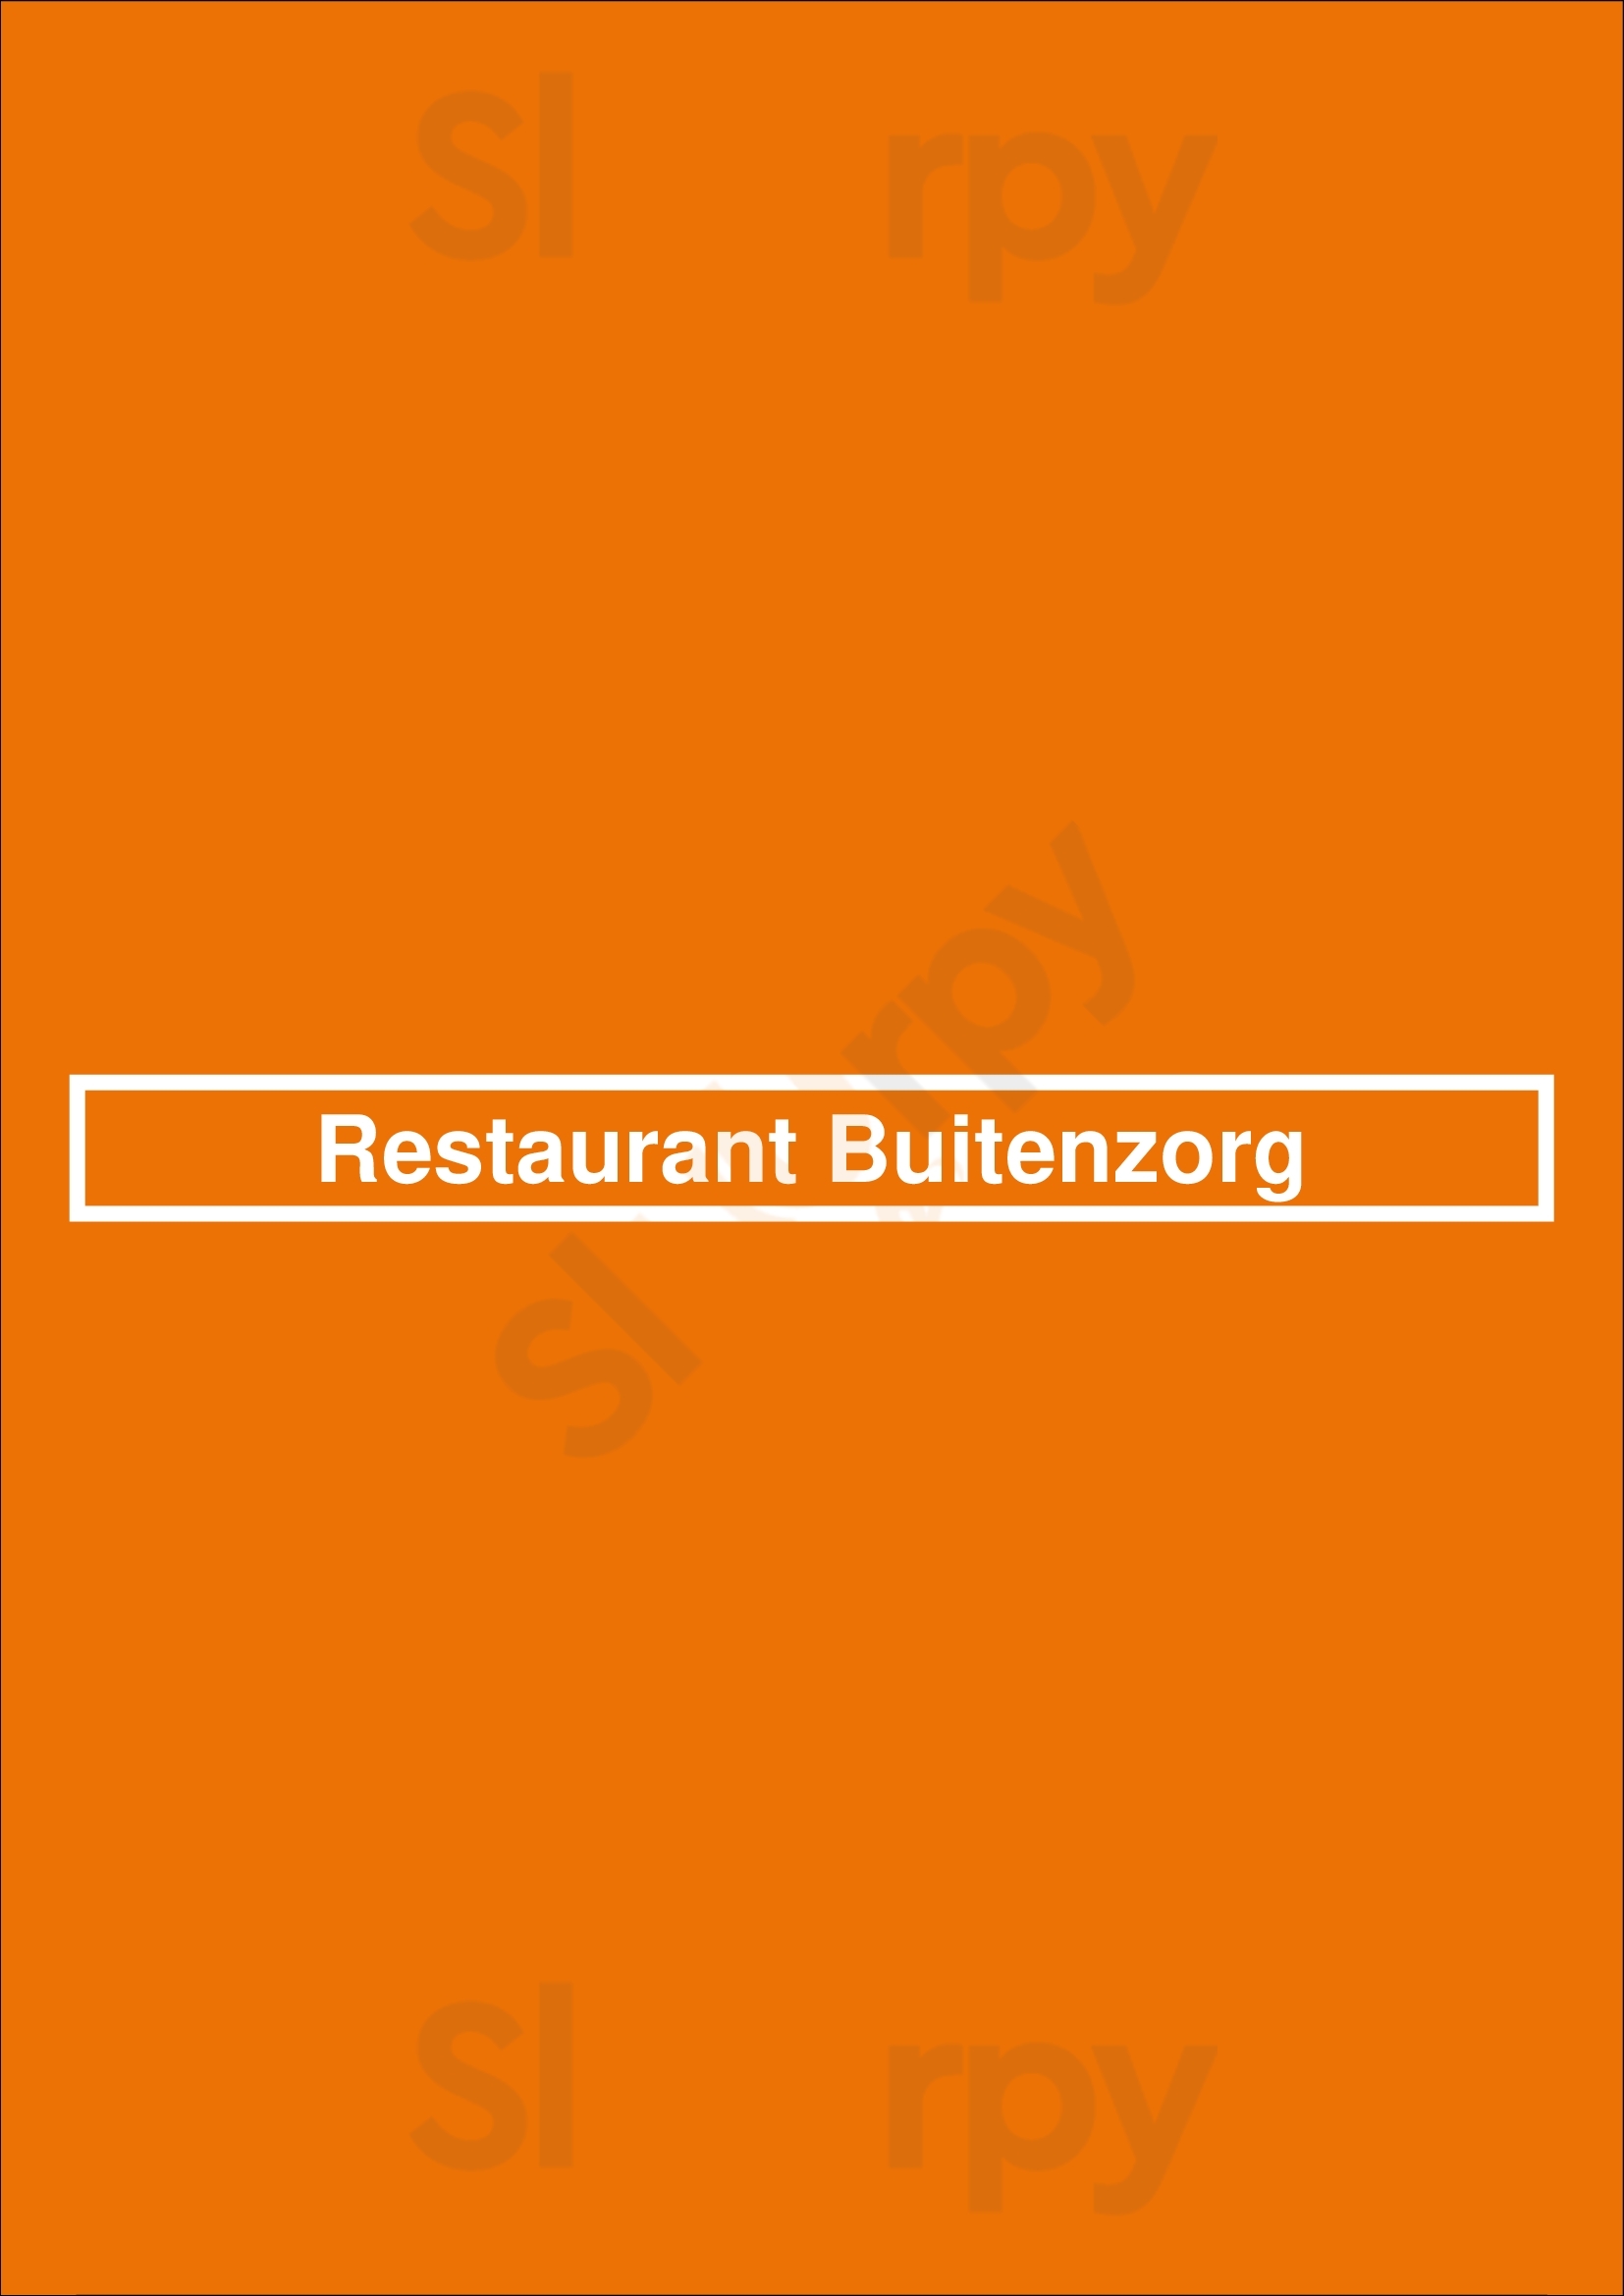 Restaurant Buitenzorg Ede Menu - 1